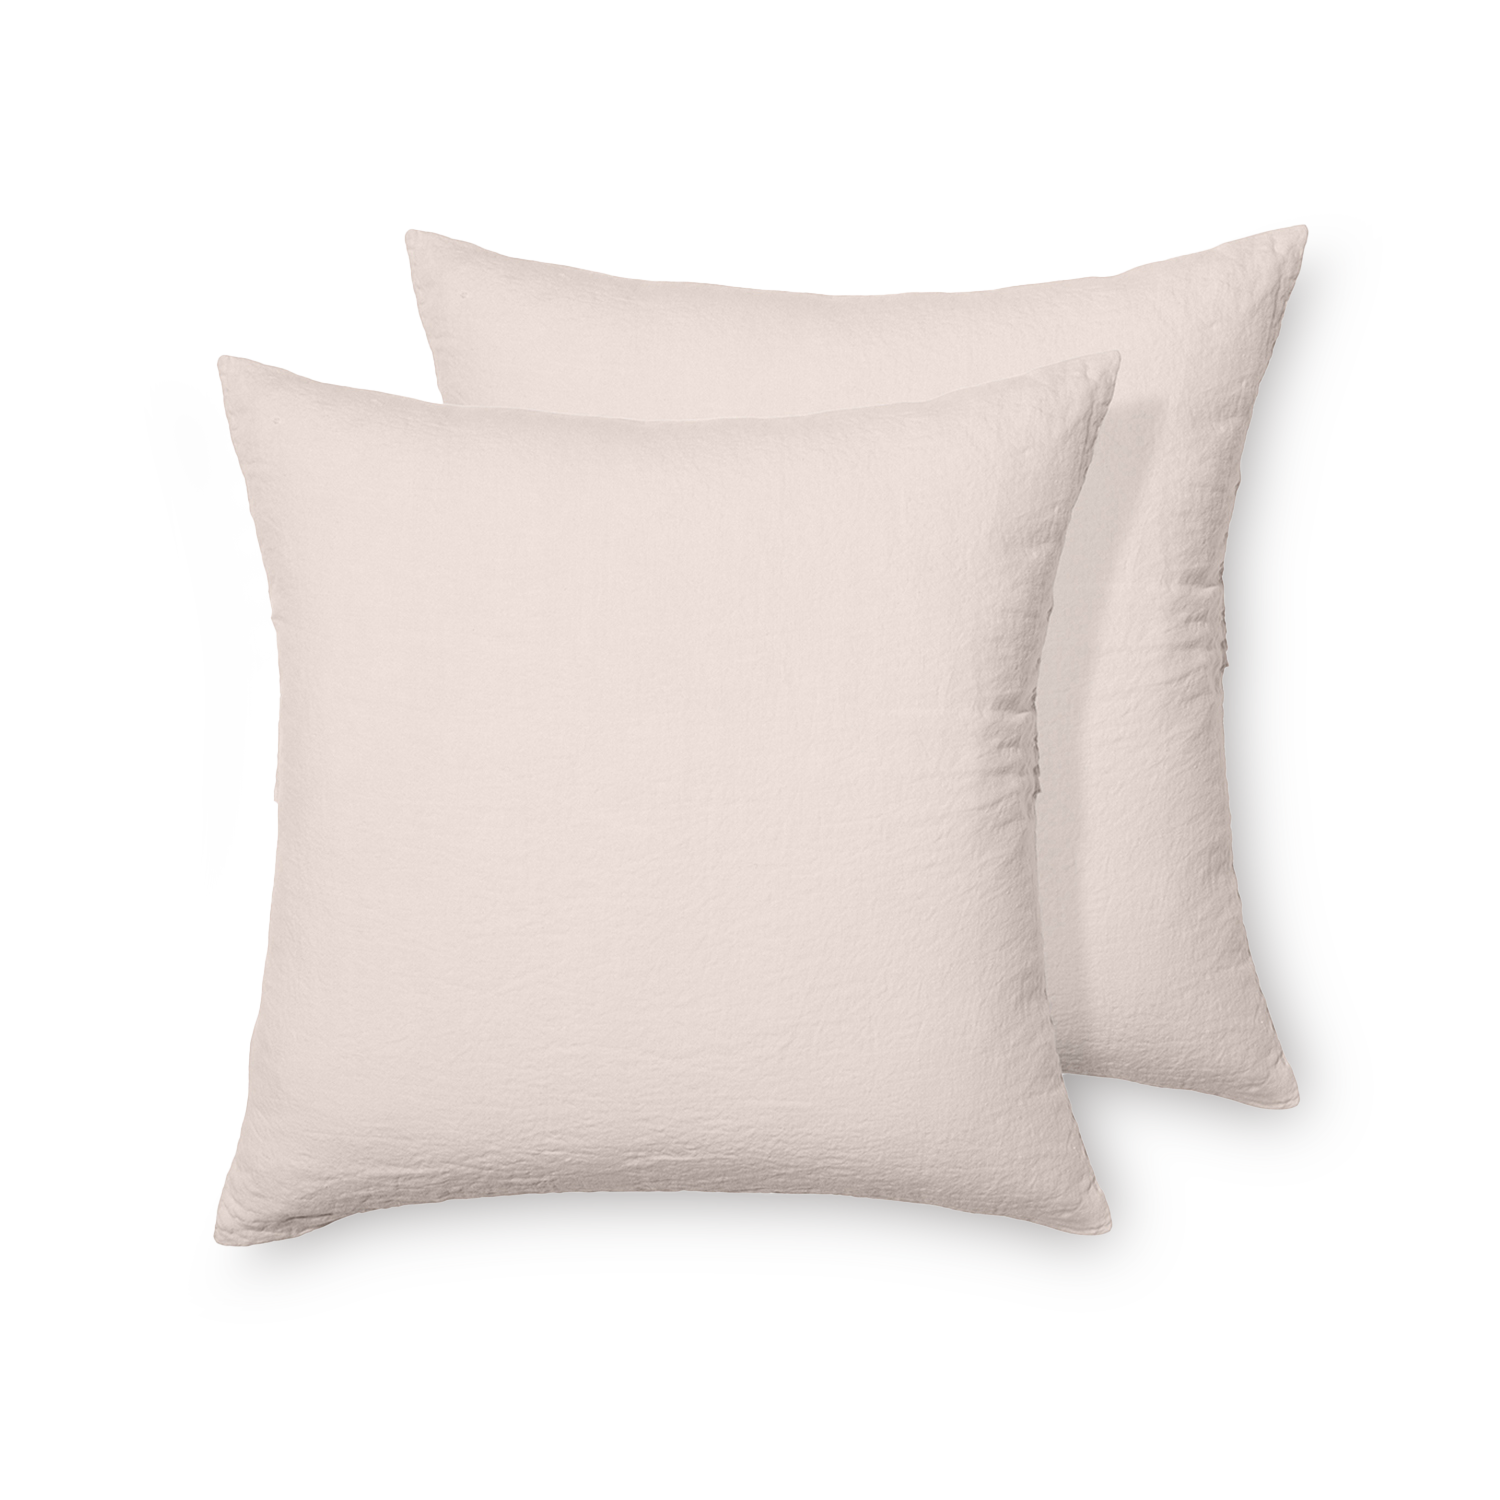 Linen Square Pillowcase Pair - Rose